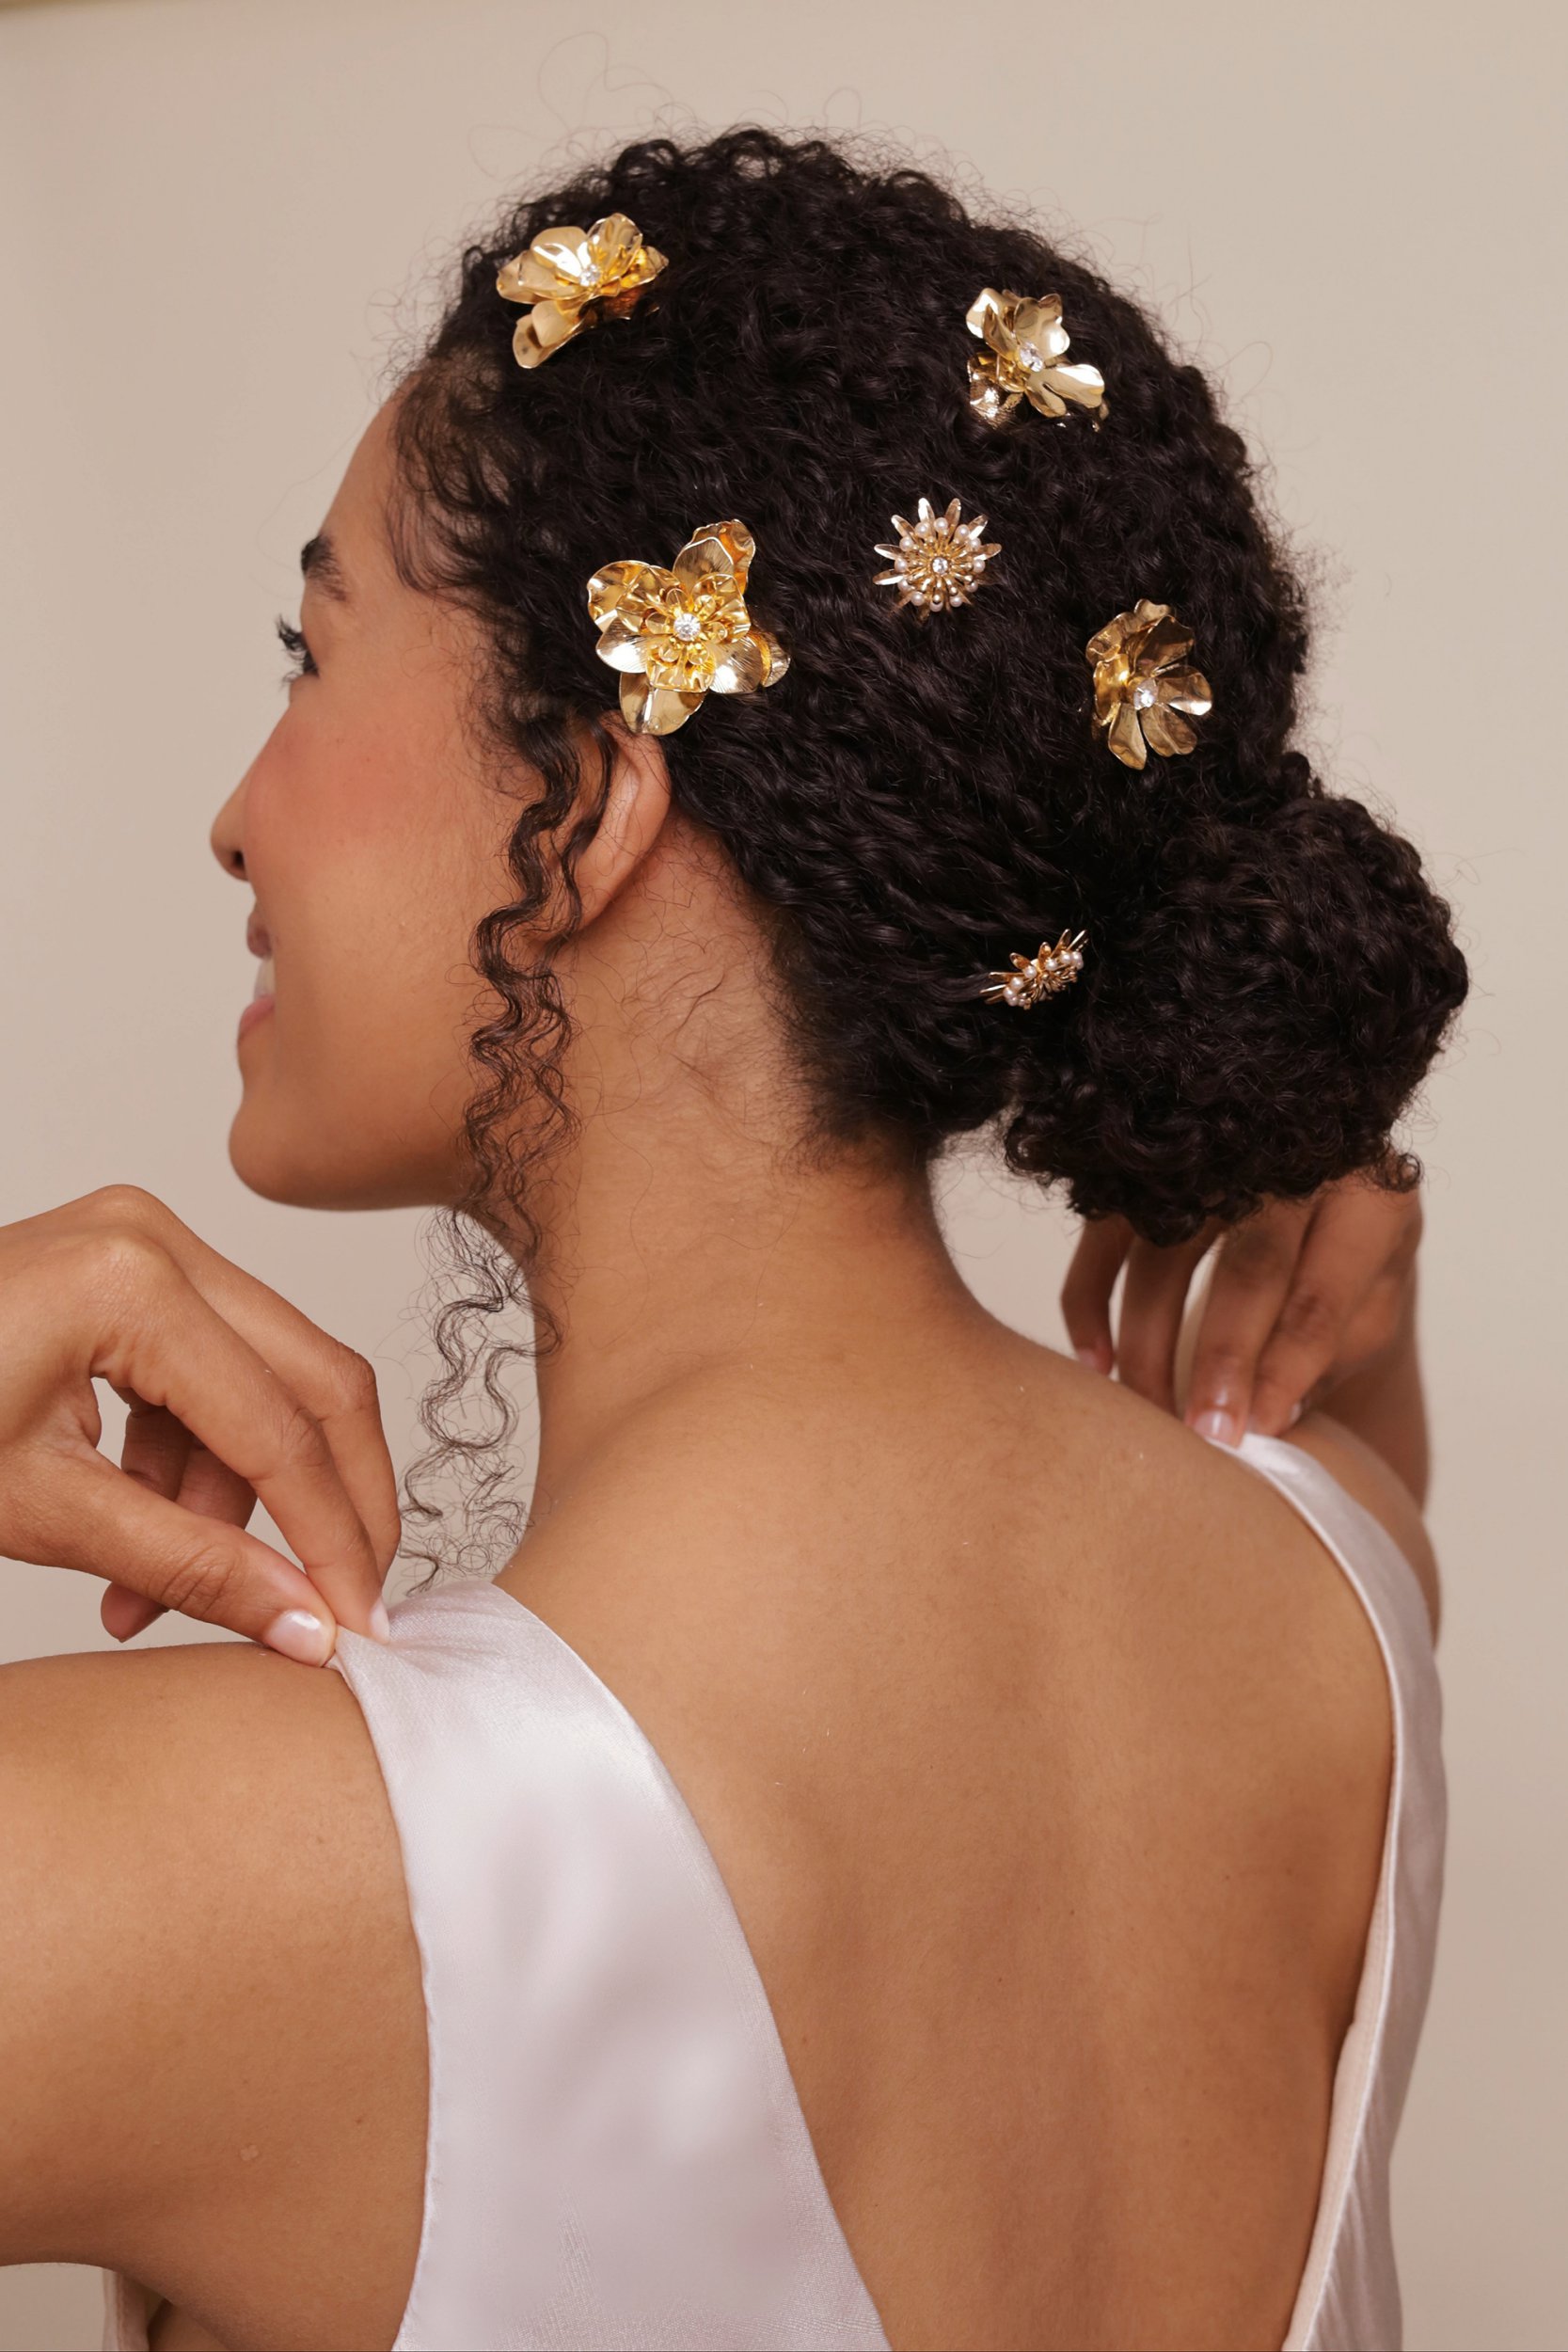 Bridal Hair Tutorial | Romantic, Curly Half-Up Hairstyles for Homecoming,  Prom, Wedding | Tina - MakeupWearables L.'s (makeupwearables) Photo |  Beautylish